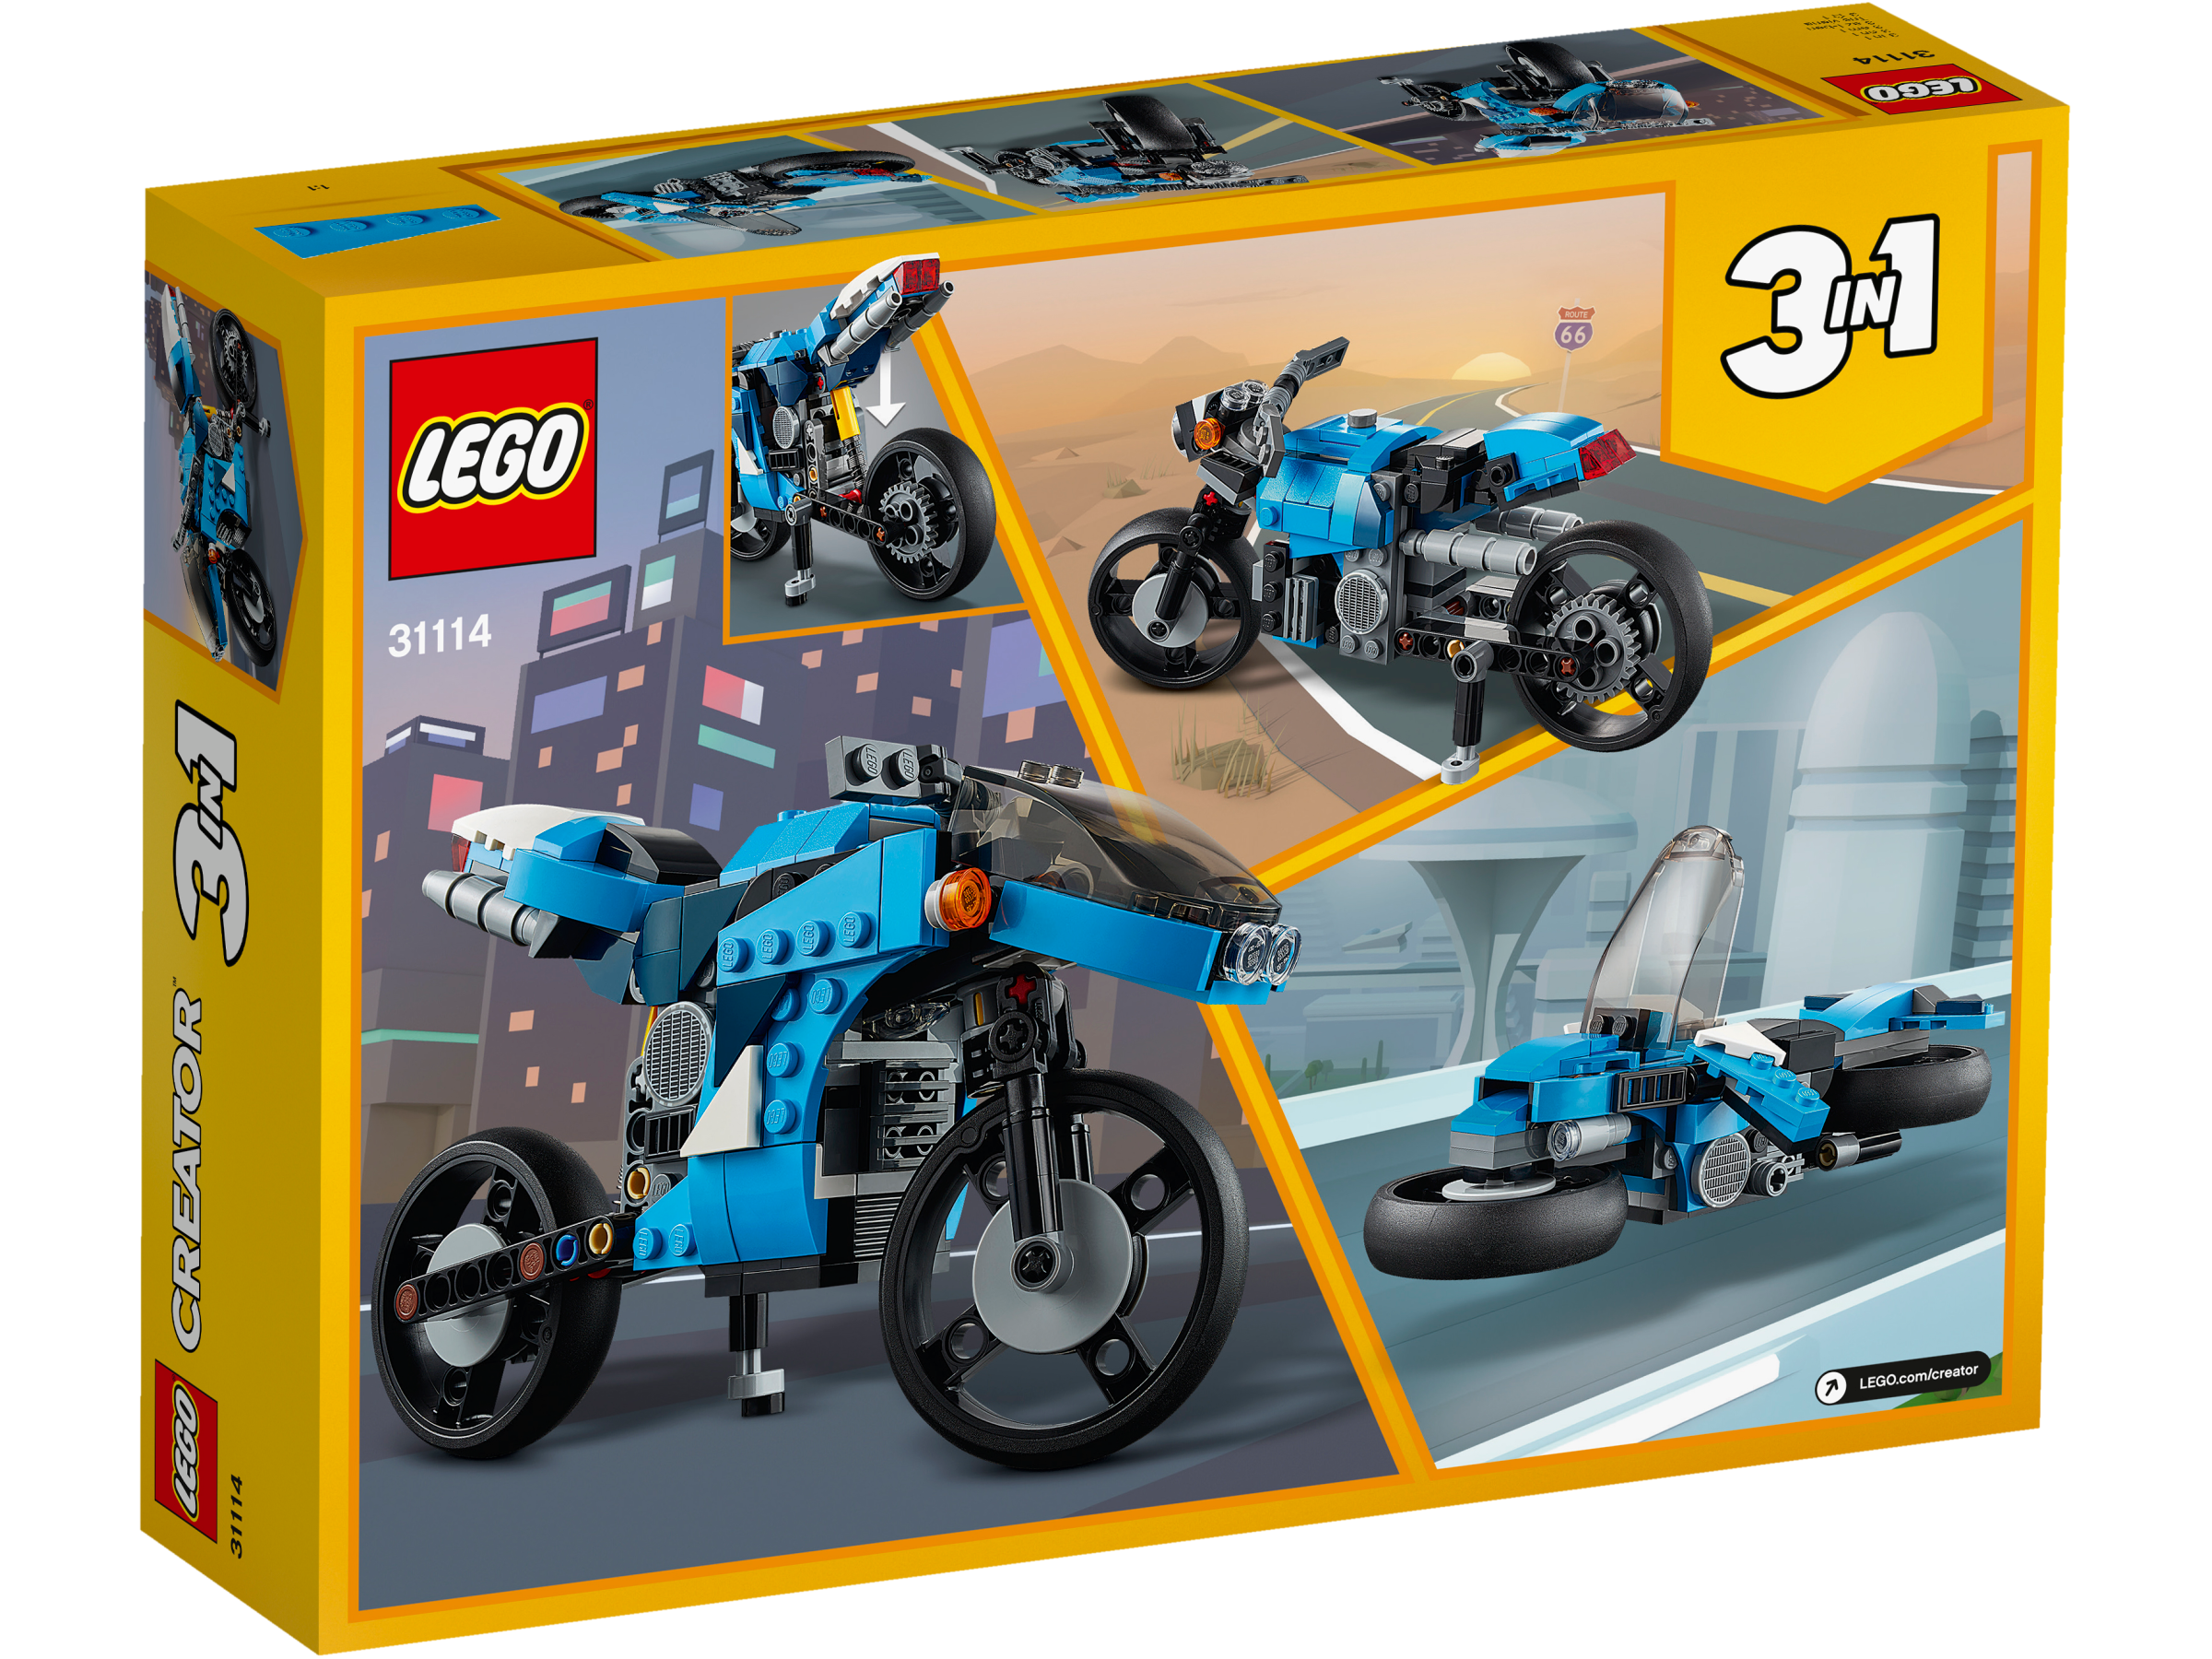 LEGO® Creator 3-in-1 31114 Geländemotorrad